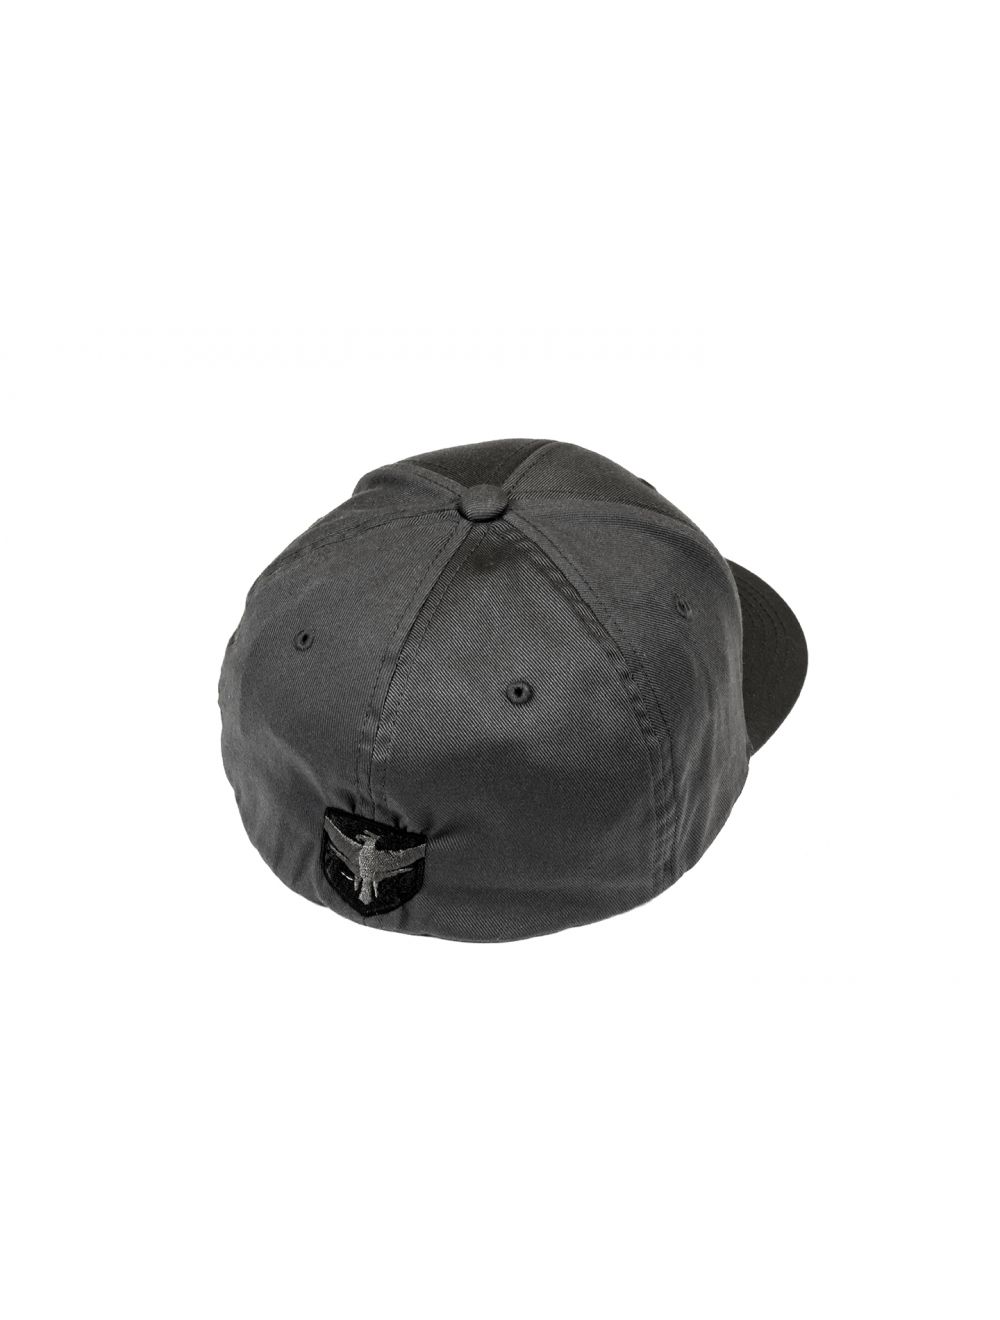 TeraFlex Dark - Falcon Shocks Curved Hat Gray/Black Visor | Flexfit (L/XL)